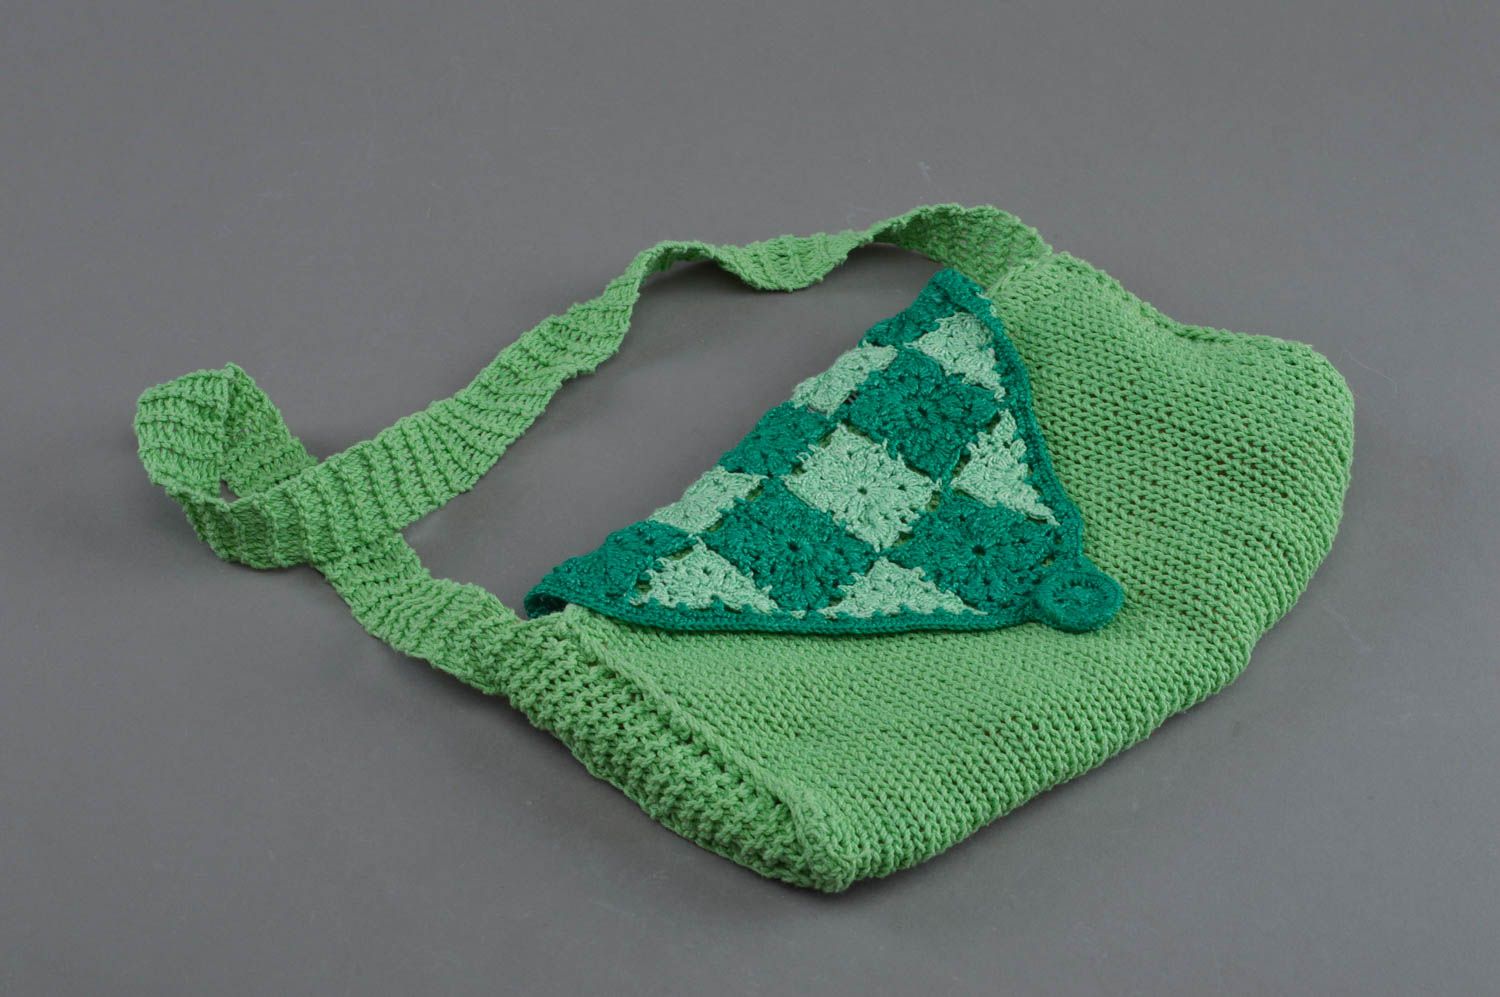 Knitting designer green purse with button handmade handbag for women photo 1